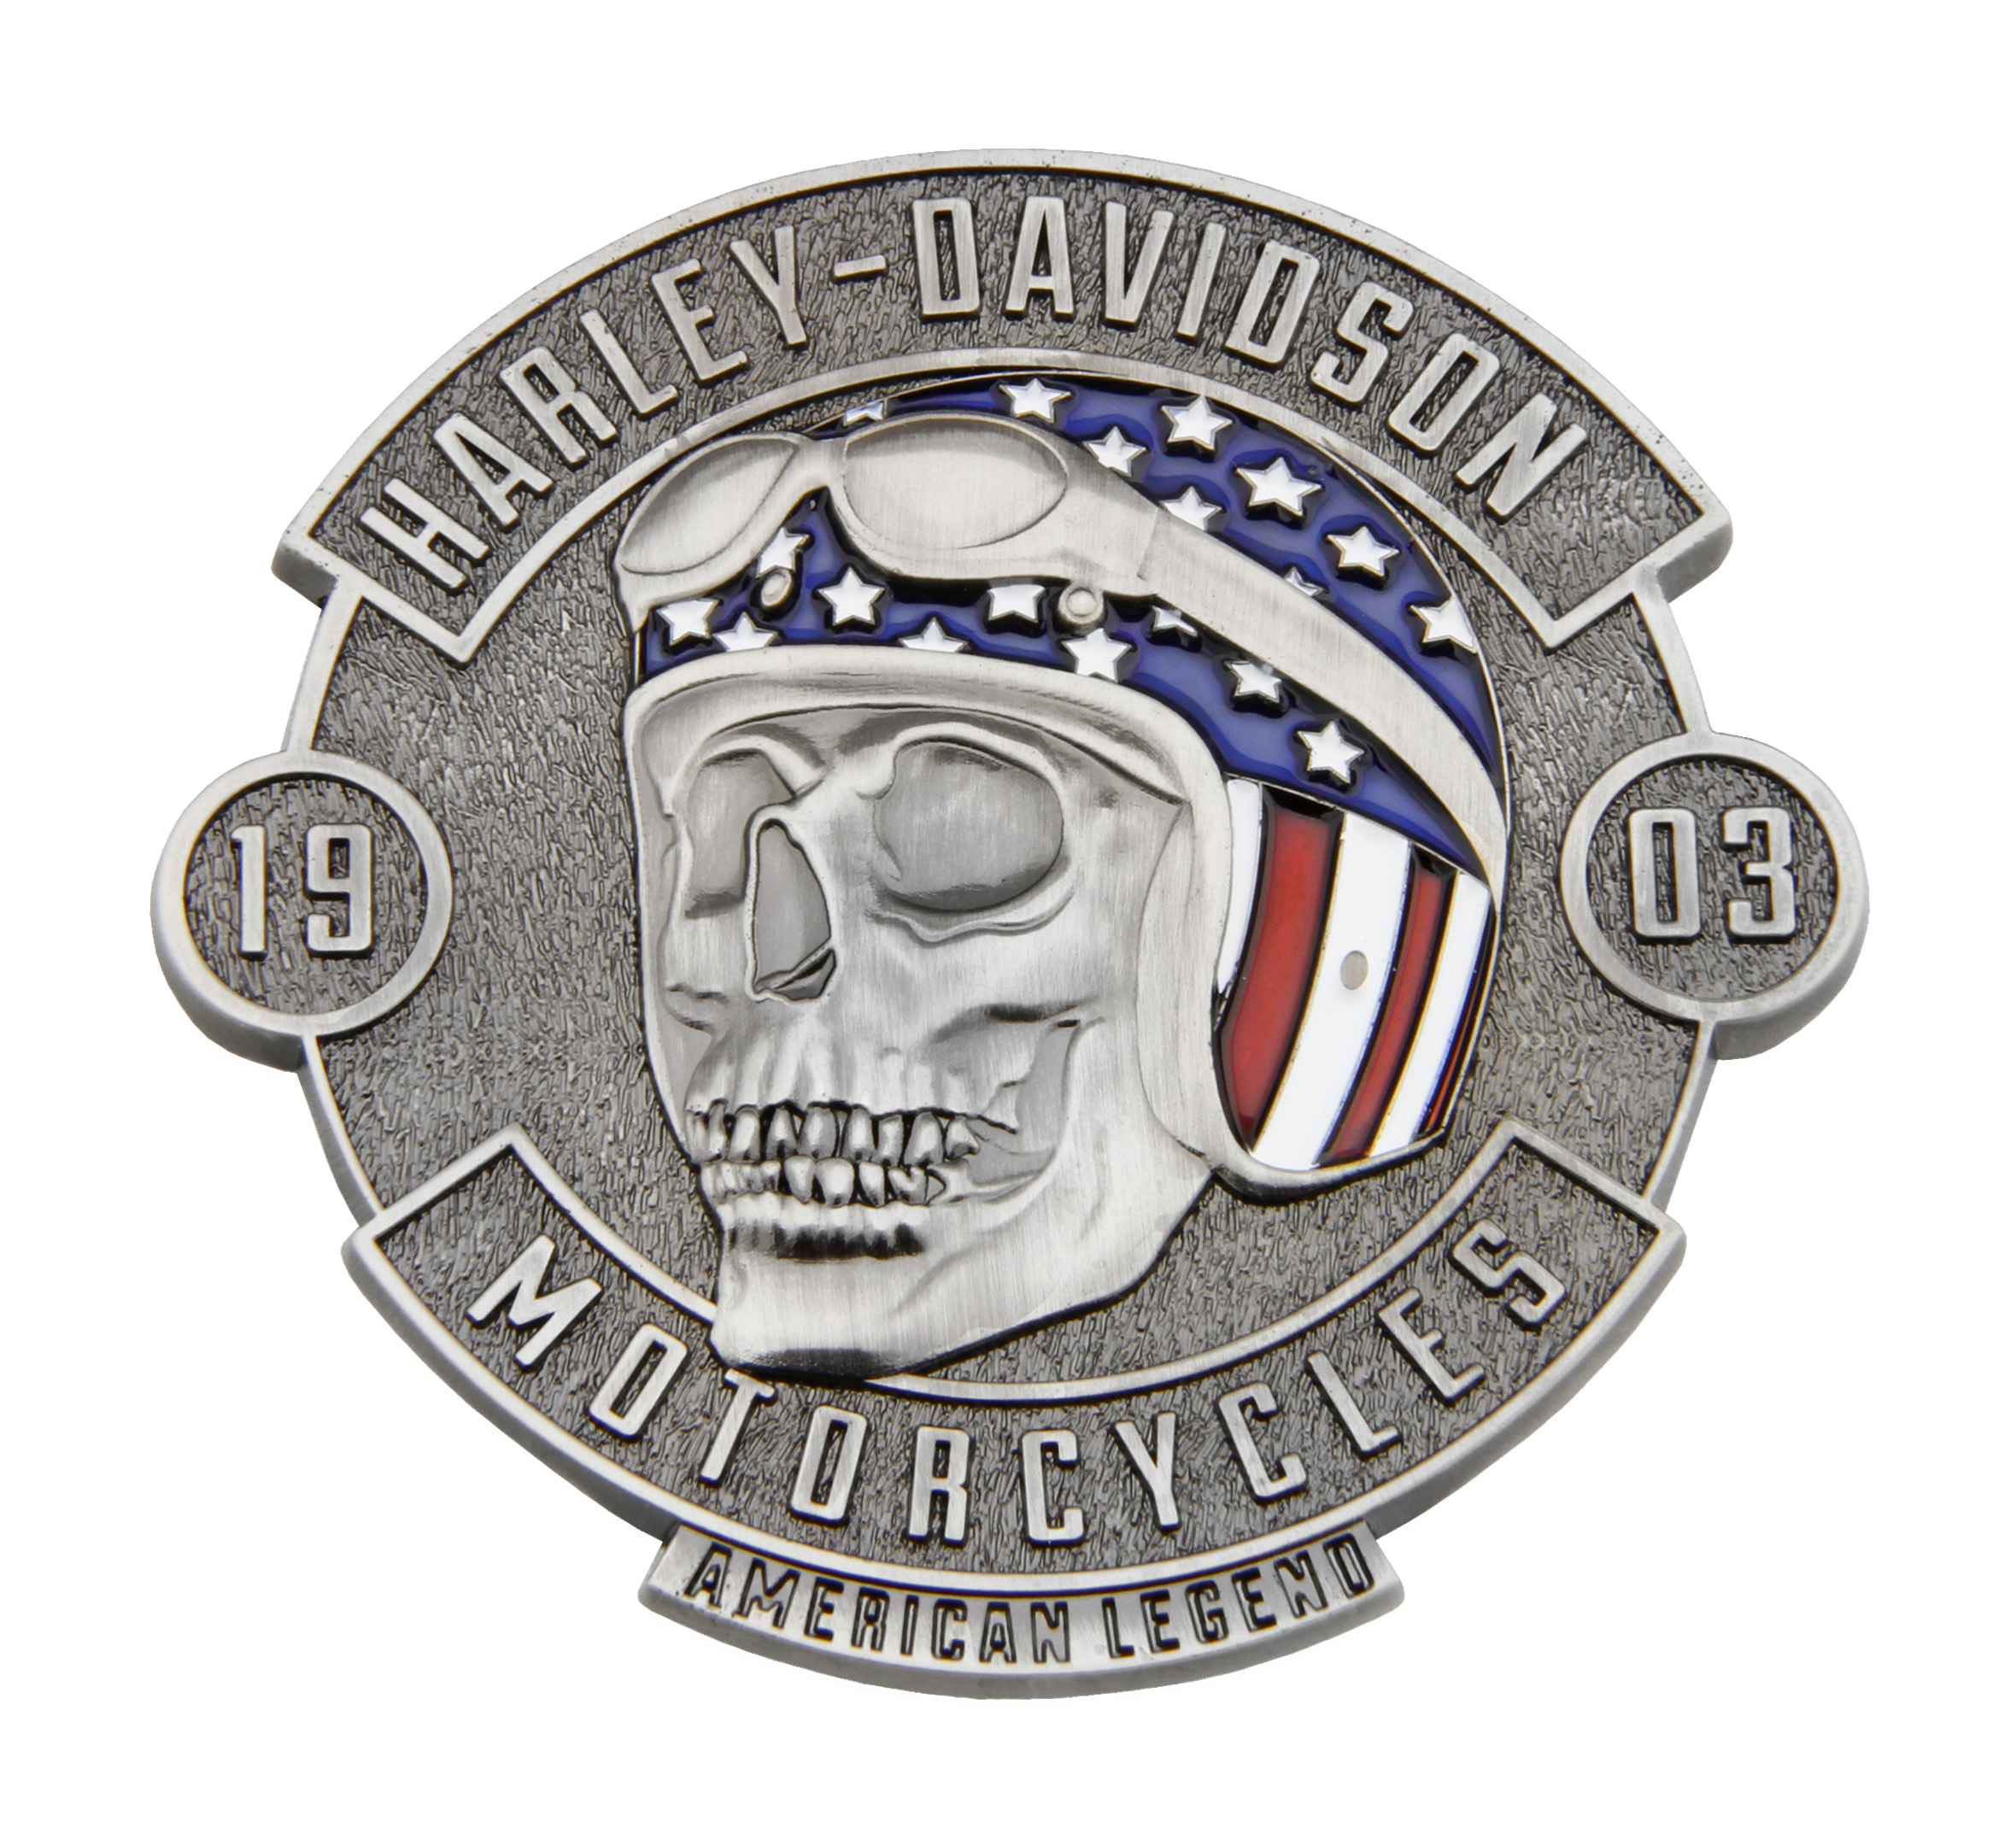 Harley-Davidson Legendary Motorcycles Blue Eagle large back patch